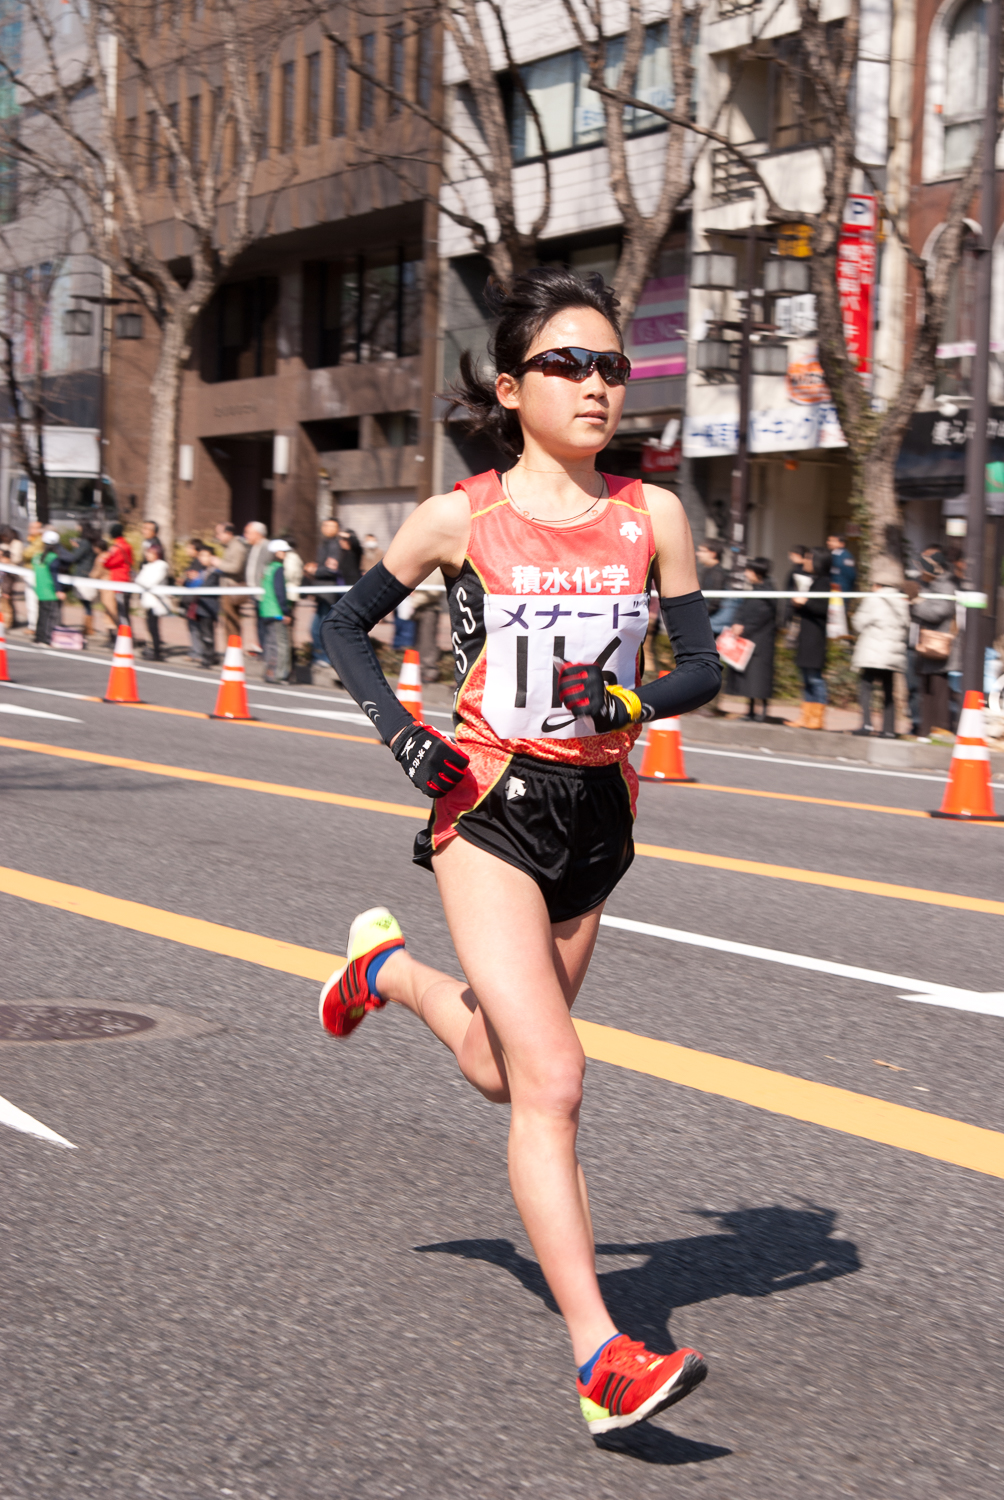 One of Japan's top marathon runners Misato Horie